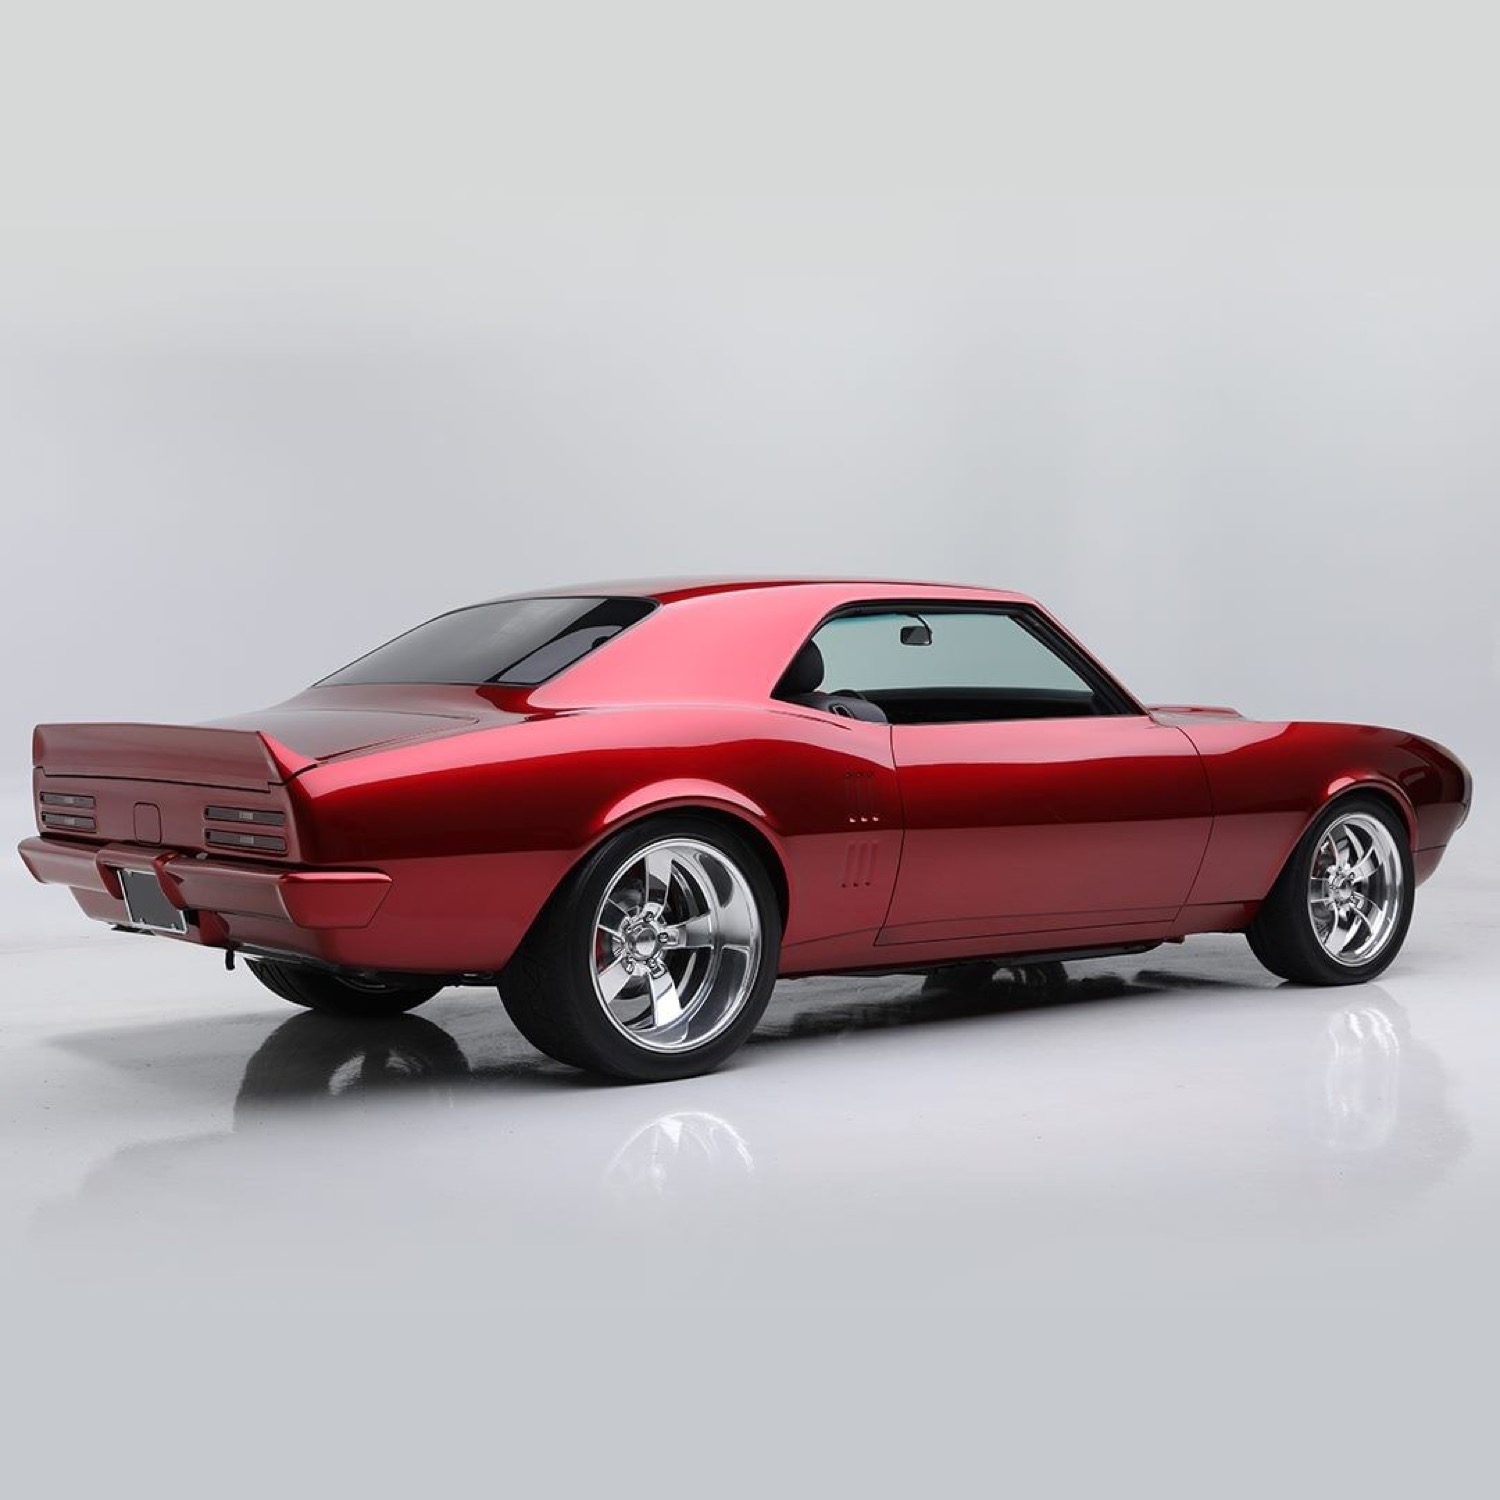 Custom 1968 Pontiac Firebird Headed To Auction At No Reserve: Video.